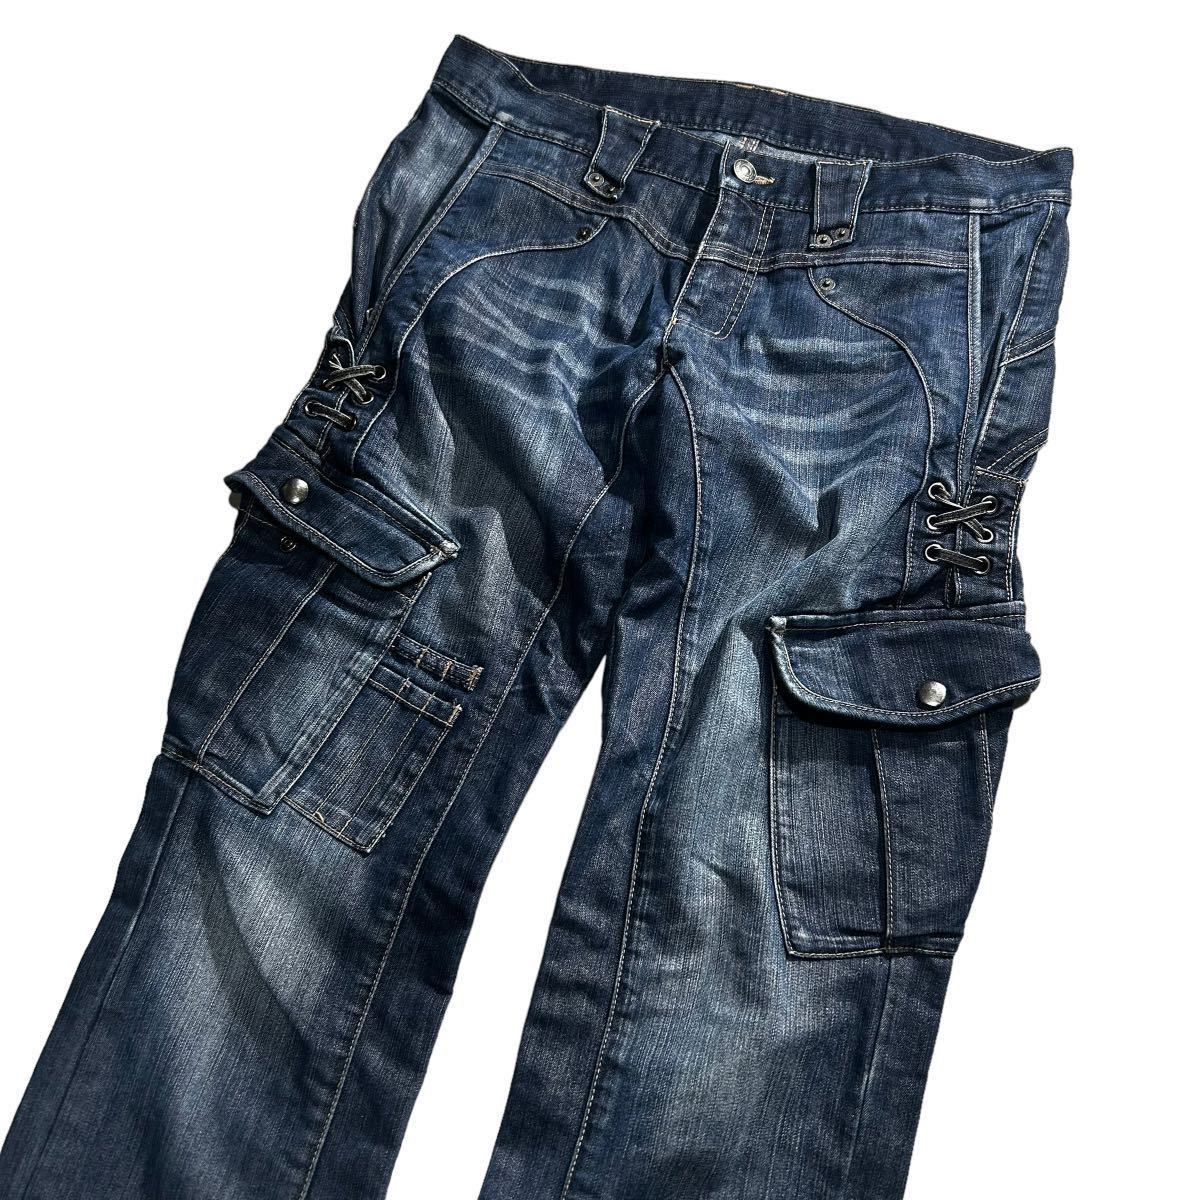 00s PPFM lace cargo denim trousers archive PEYTON PLACE FOR MEN collection design japan ピーピーエフエム jeans pants 90s rare _画像2